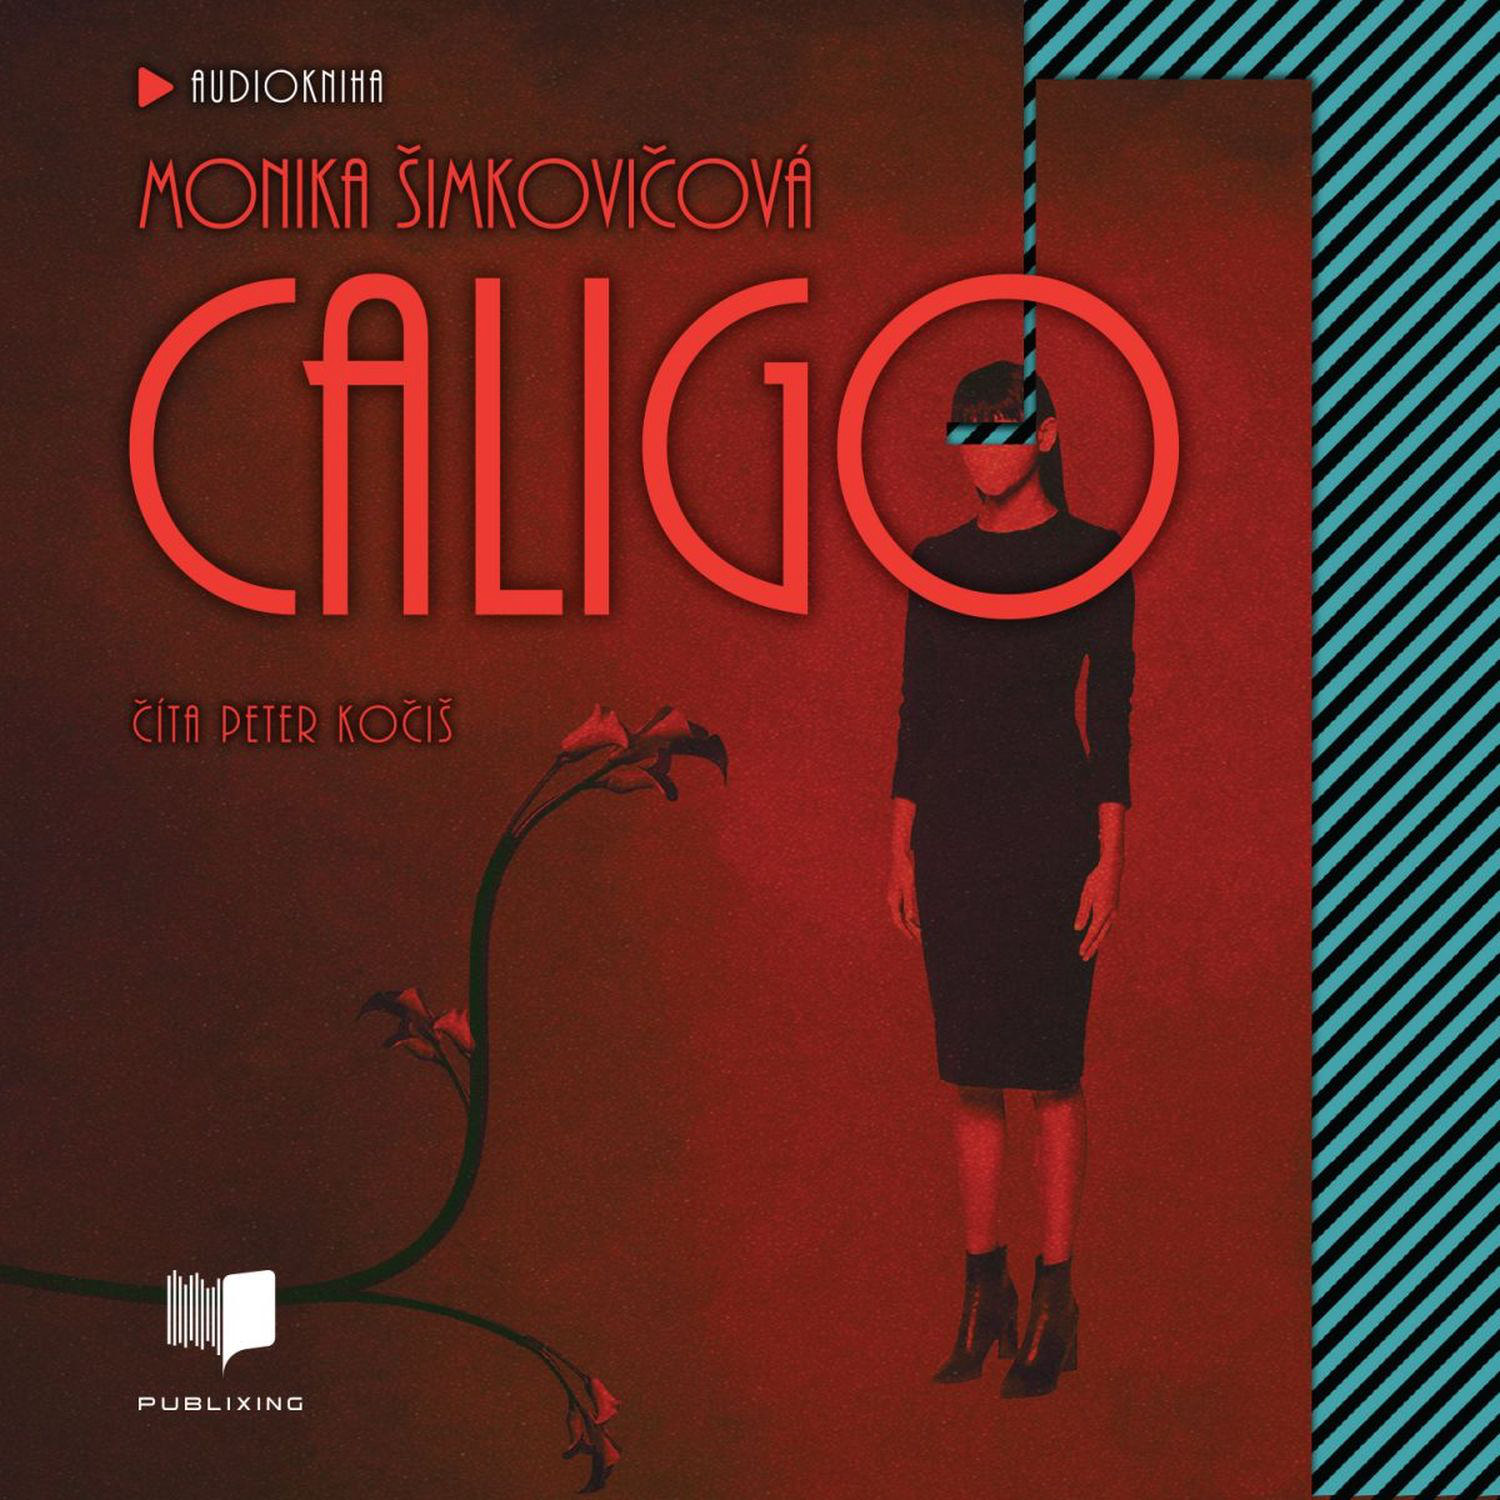 CD Shop - AUDIOKNIHA MONIKA SIMKOVICOVA / CITA PETER KOCIS CALIGO (MP3-CD)